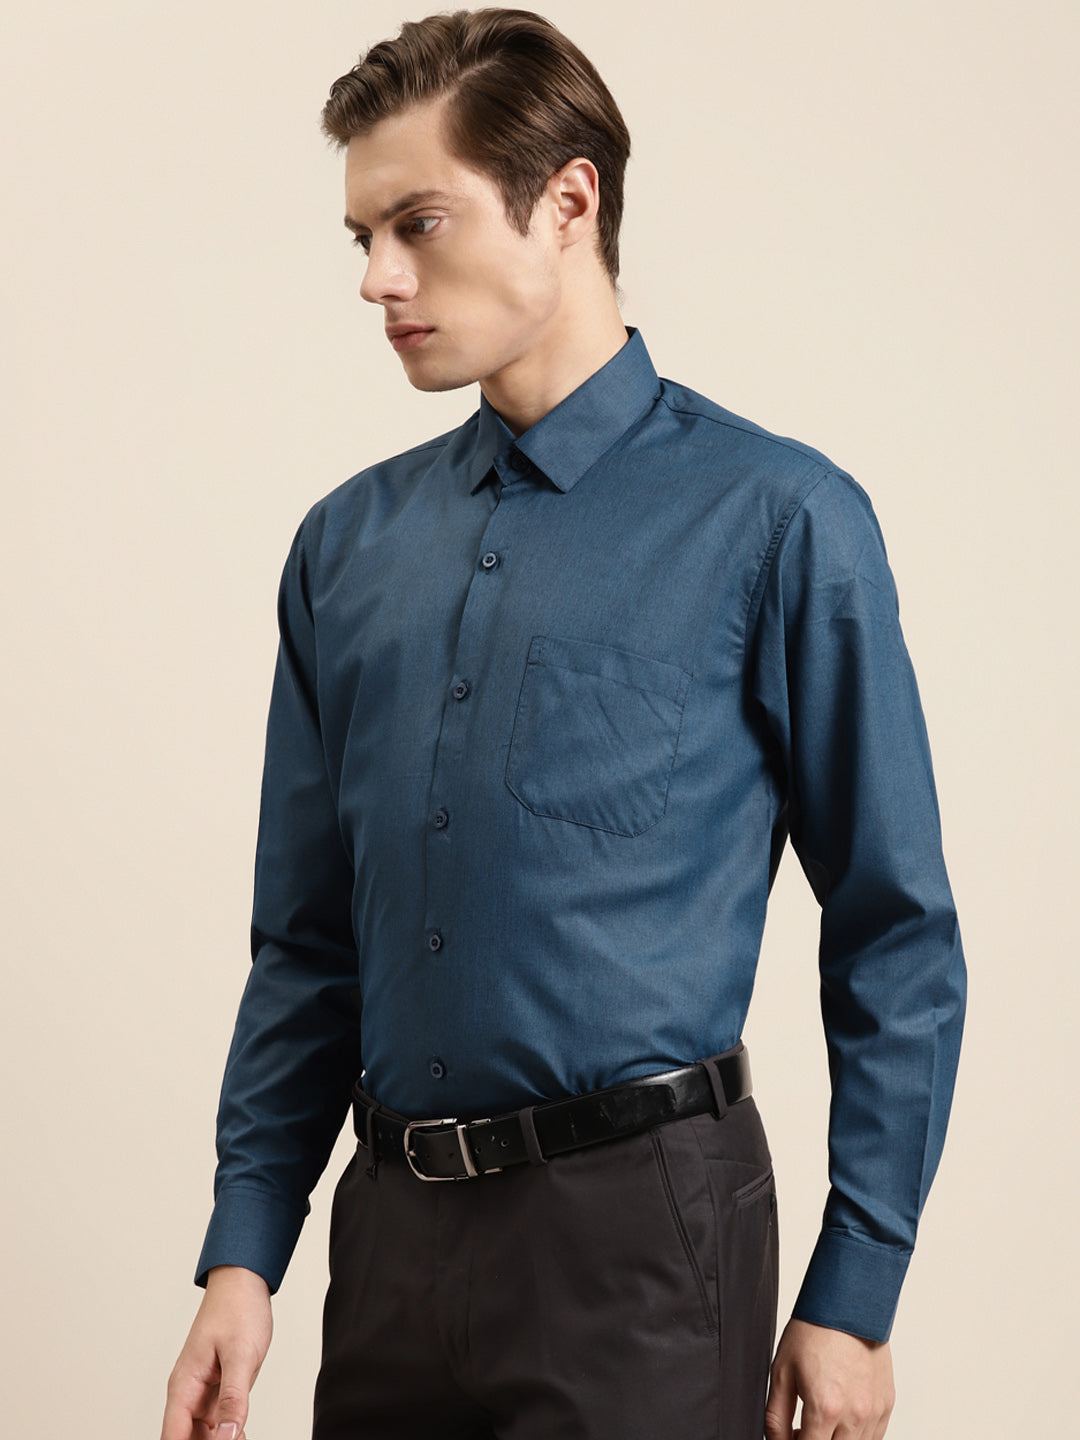 Men's Cotton Navy Blue Formal Classic Shirt - Sojanya